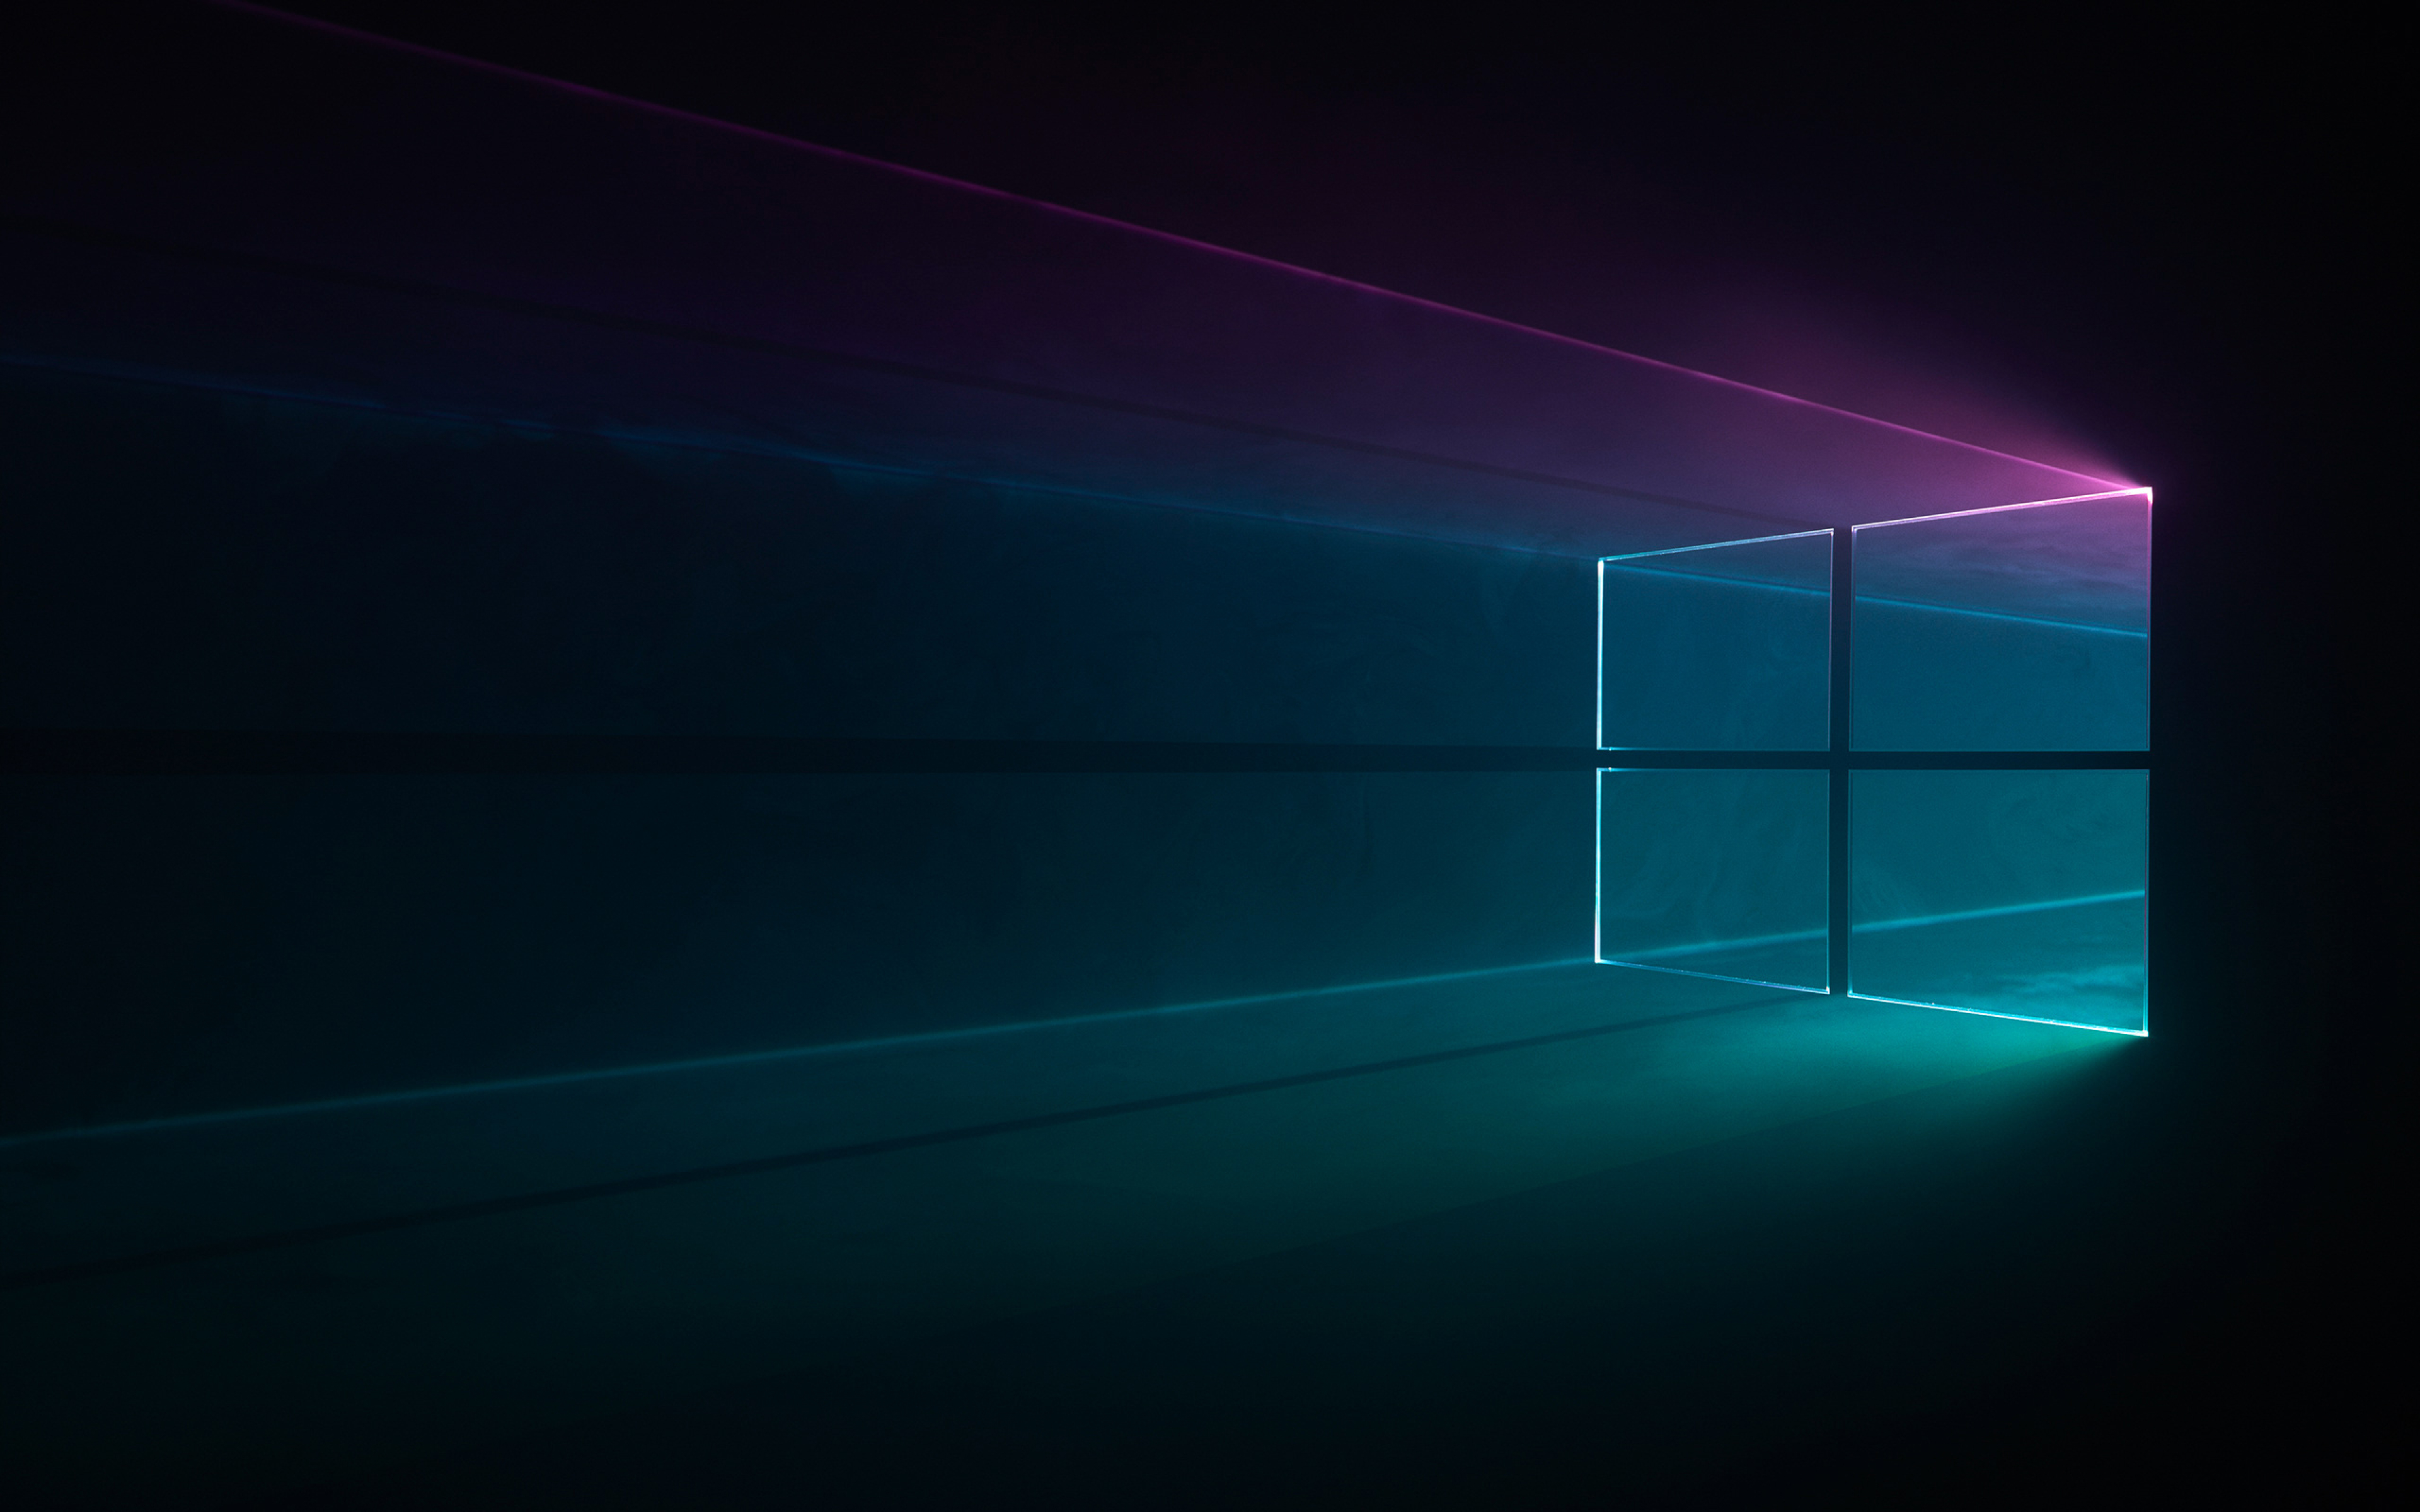 Windows 11 Wallpaper 4K, Microsoft's image teasing Windows 11 is now